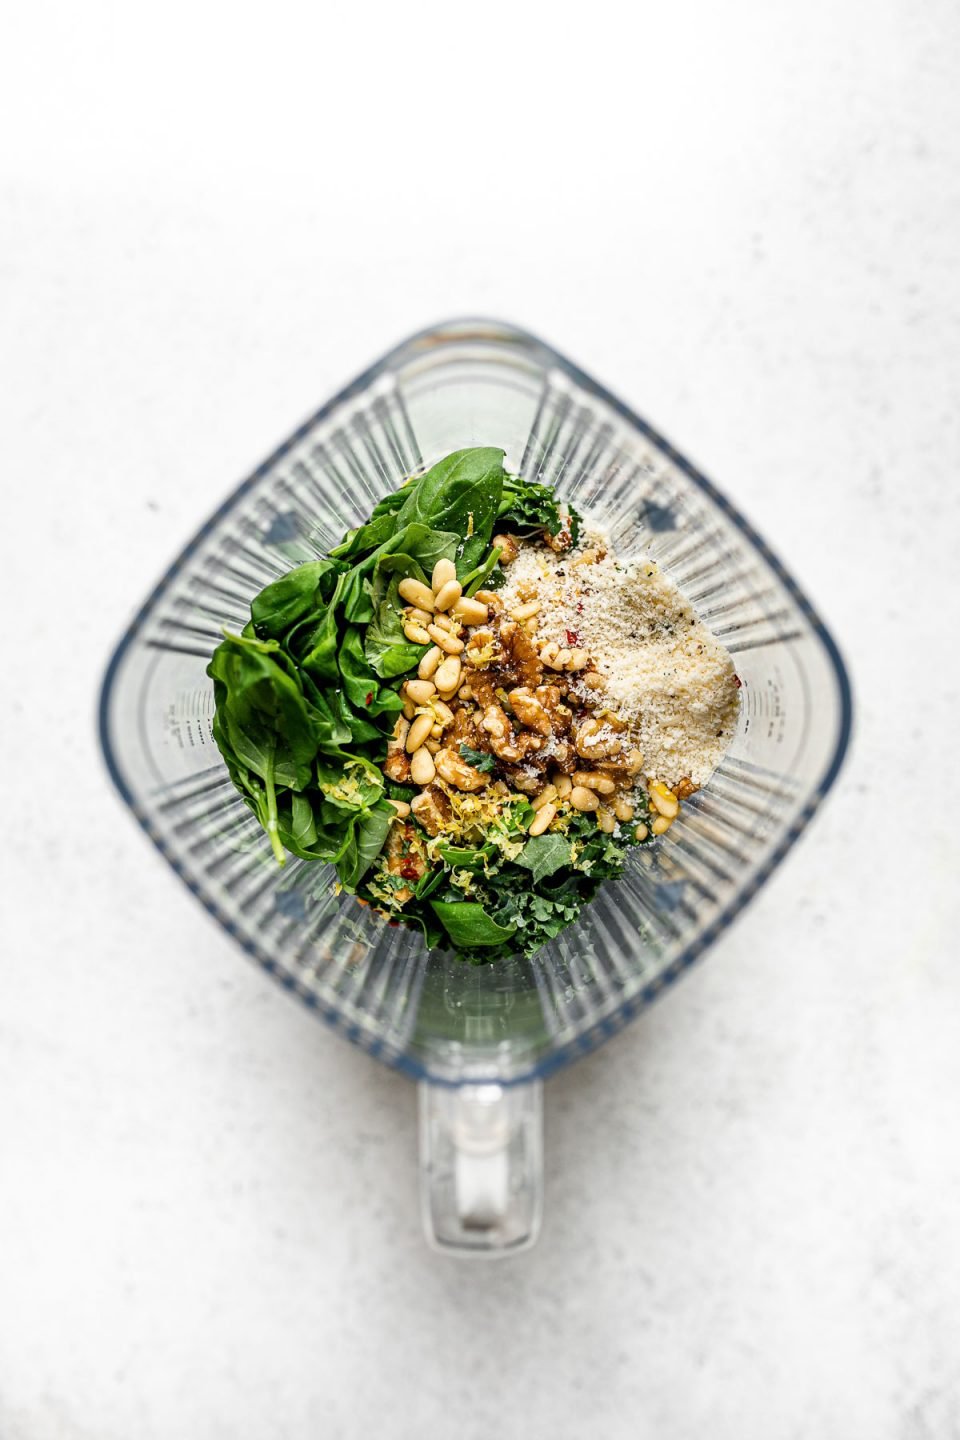 Kale pesto ingredients arranged in a Zwilling Enfinigy Blender – basil, walnuts, parmesan, pine nuts, lemon zest, & kale. The blender jar sits atop a white surface.